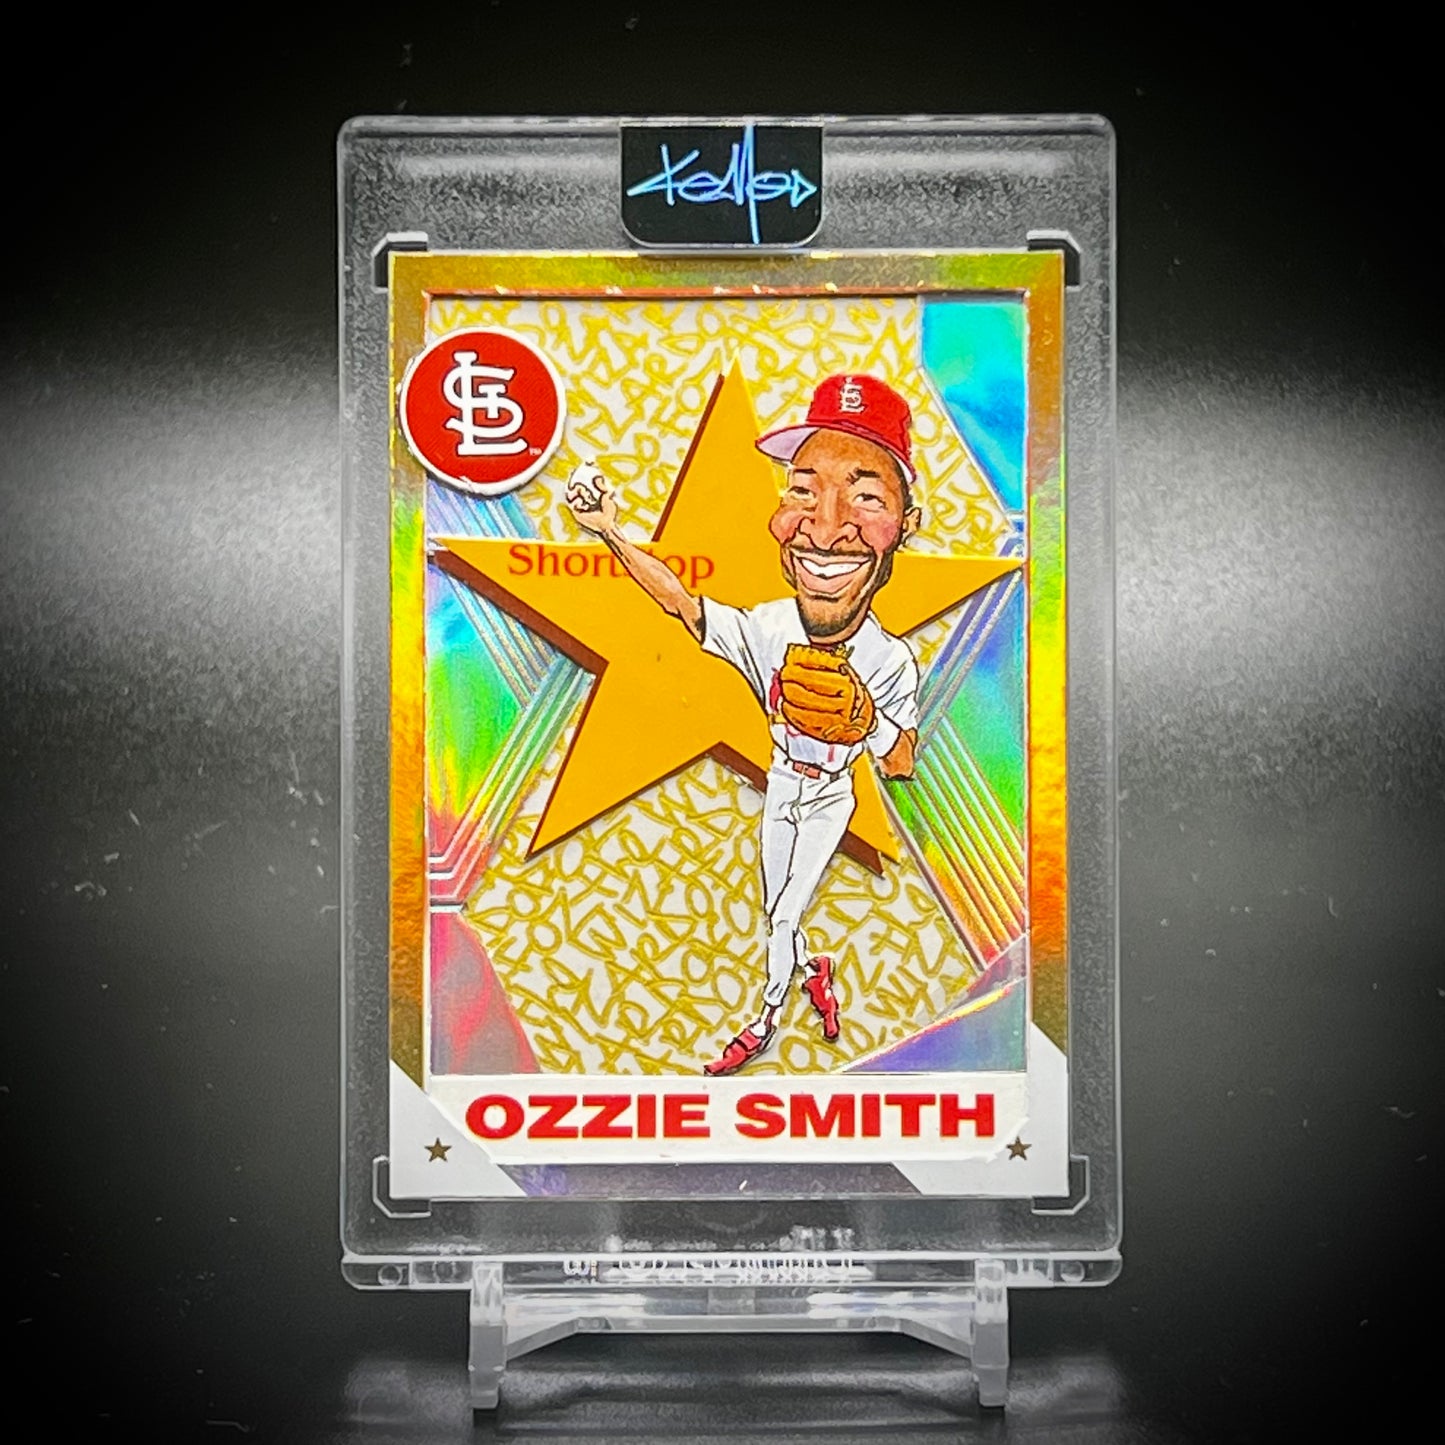 Ozzie Smith “All-Star” Art Card By KEMO